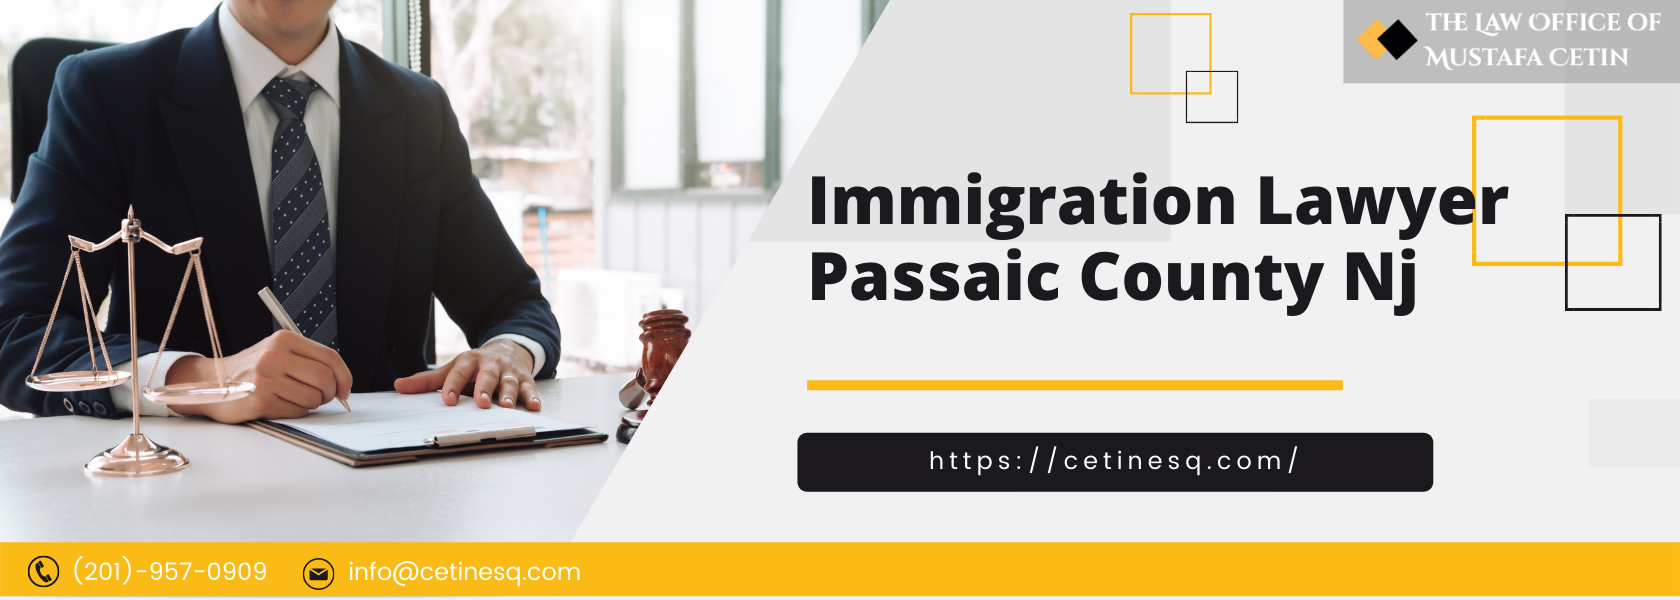 Immigration Lawyer Passaic County Nj